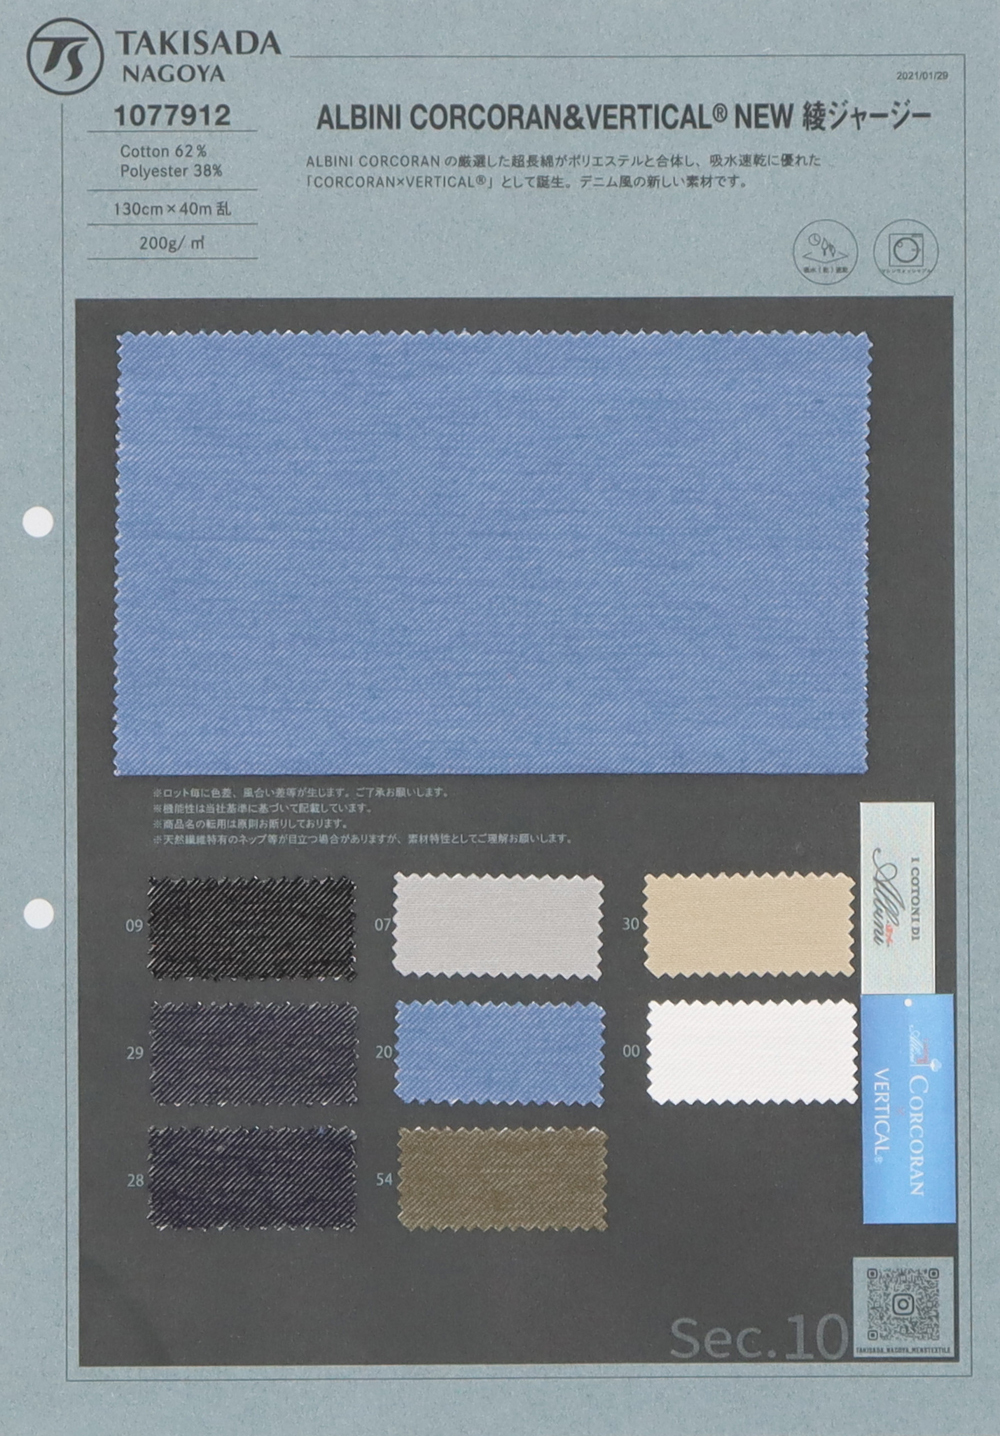 1077912 ALBINI CORCORAN Water-absorbent Quick-drying Twill Jersey[Textile / Fabric] Takisada Nagoya